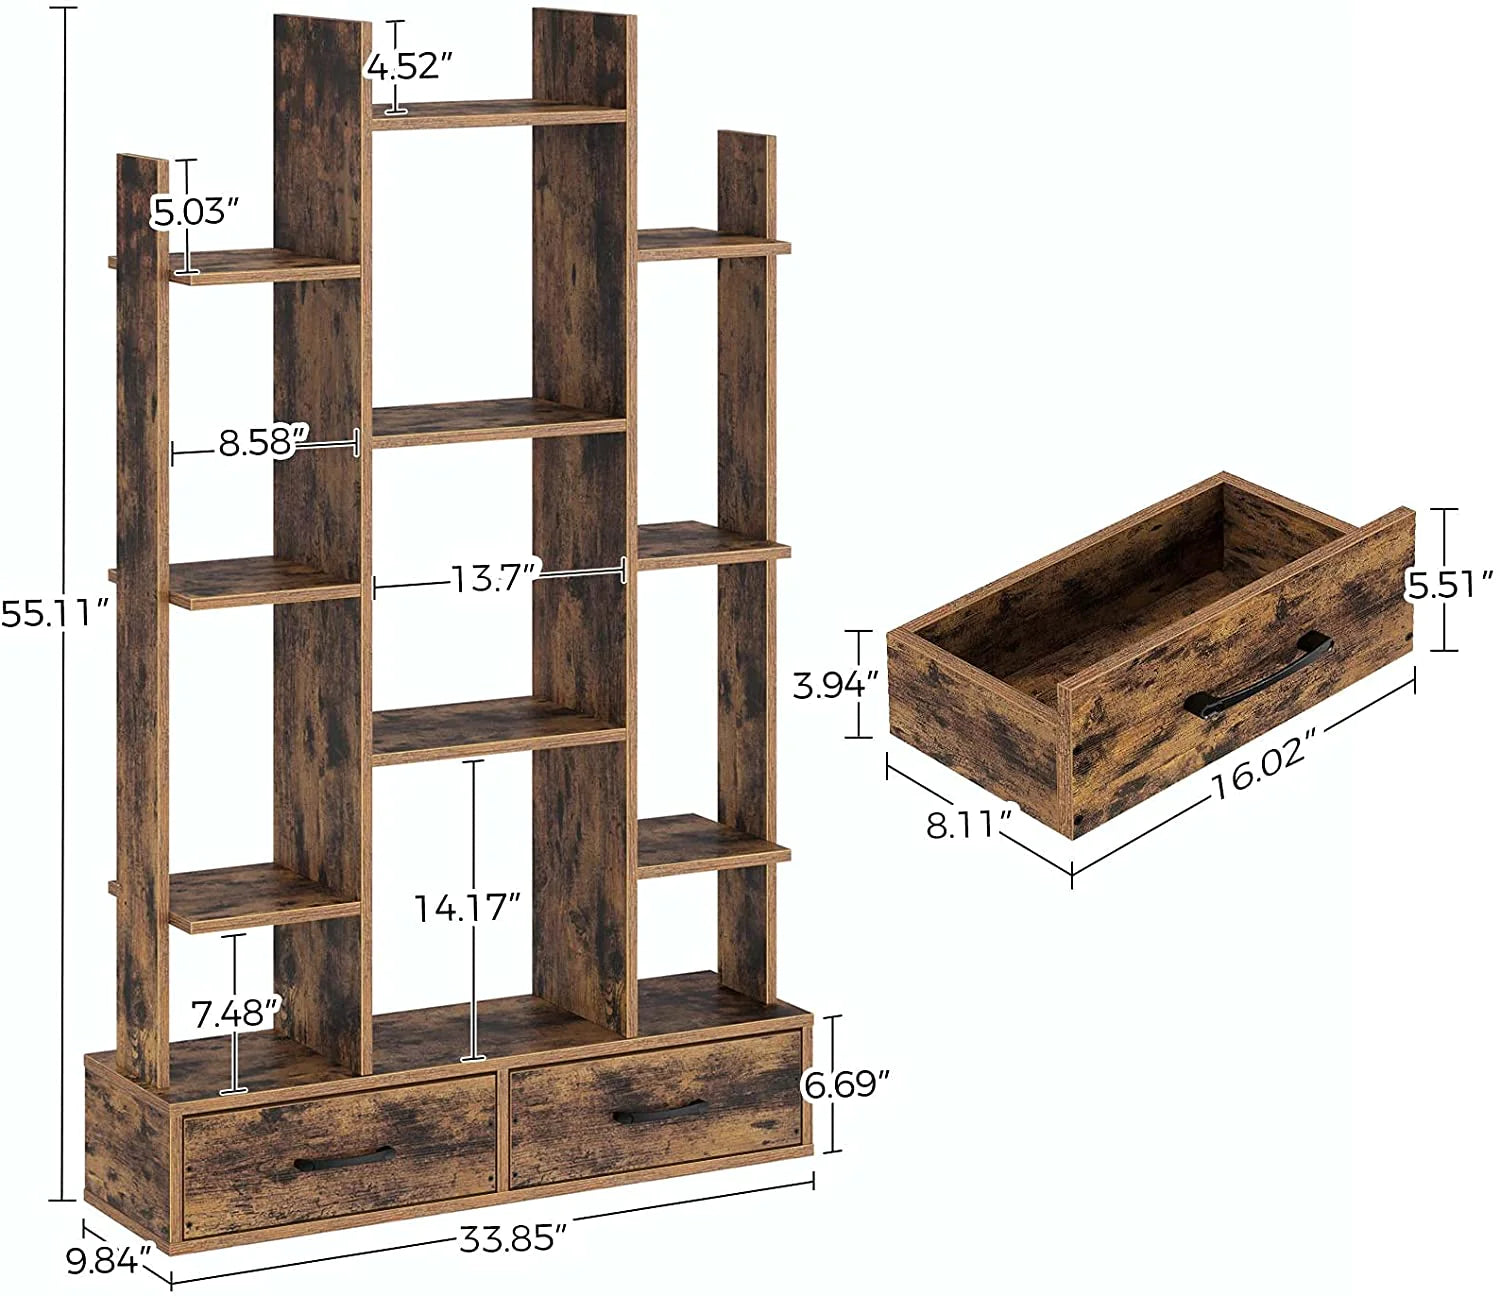 Bookshelf: Rustic Wooden Showcase Bookshelves with 2 Wooden Drawers